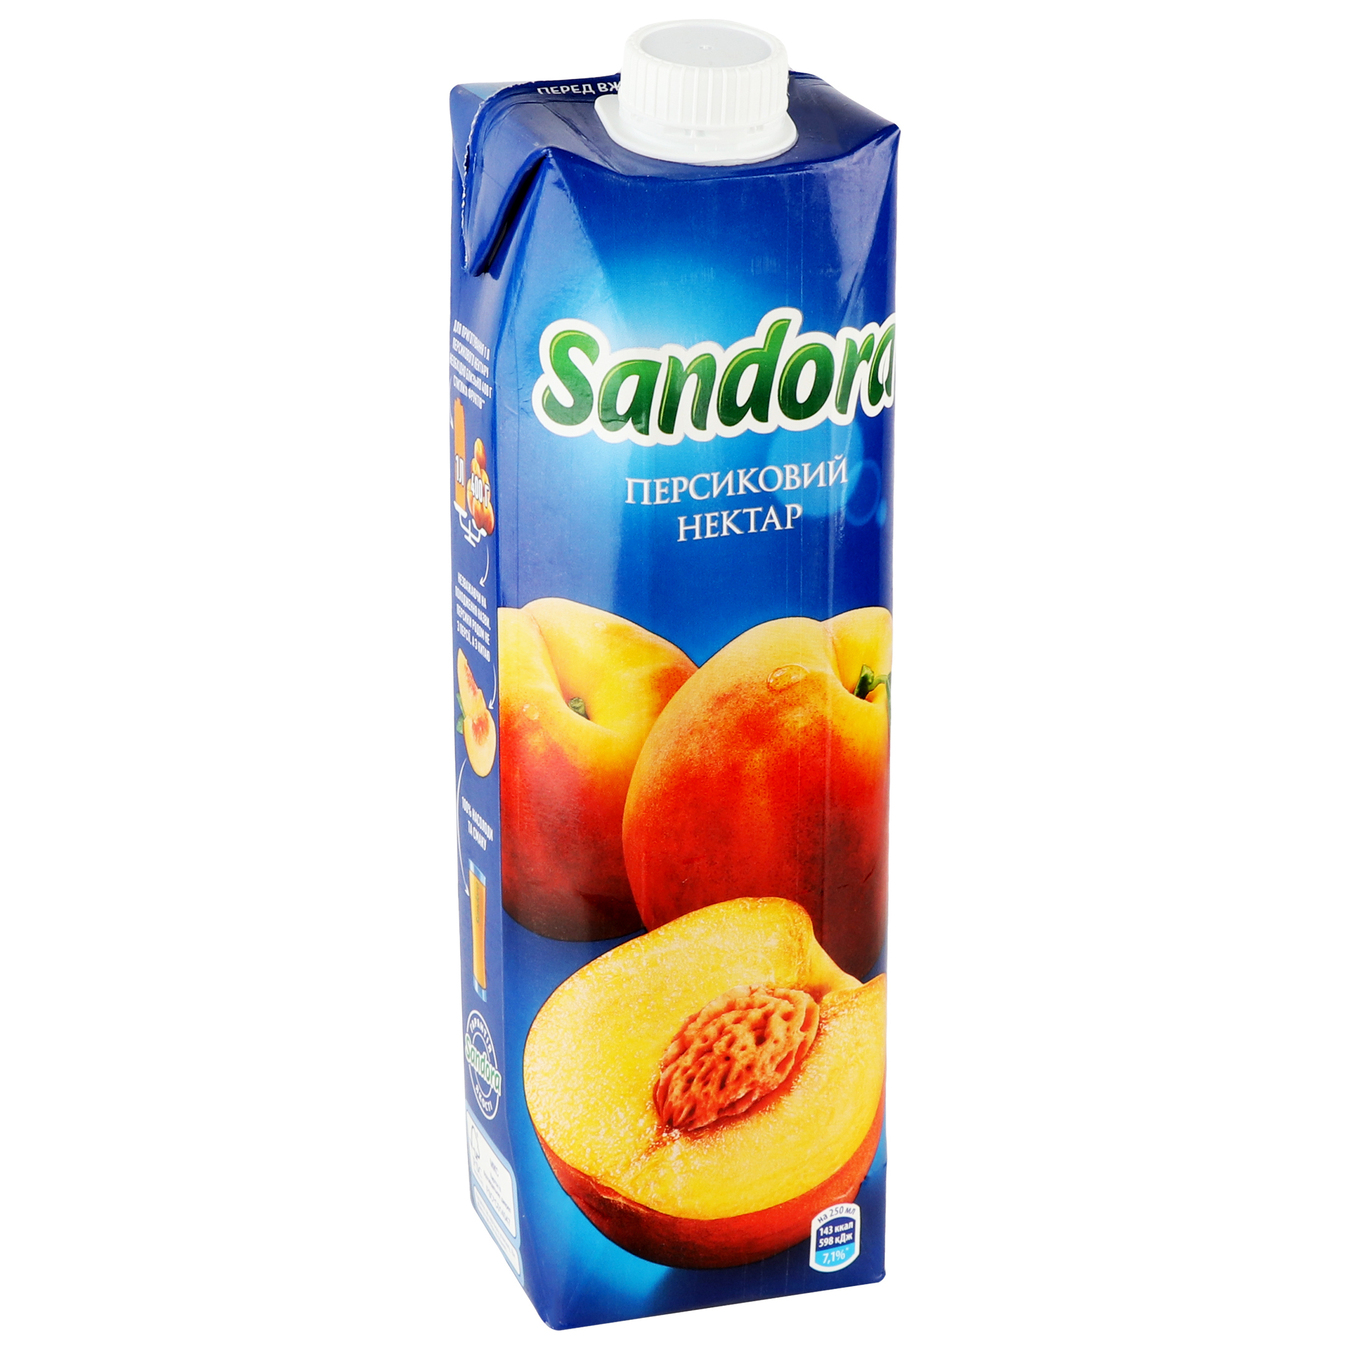 Sandora Peach Nectar 0,95l 3